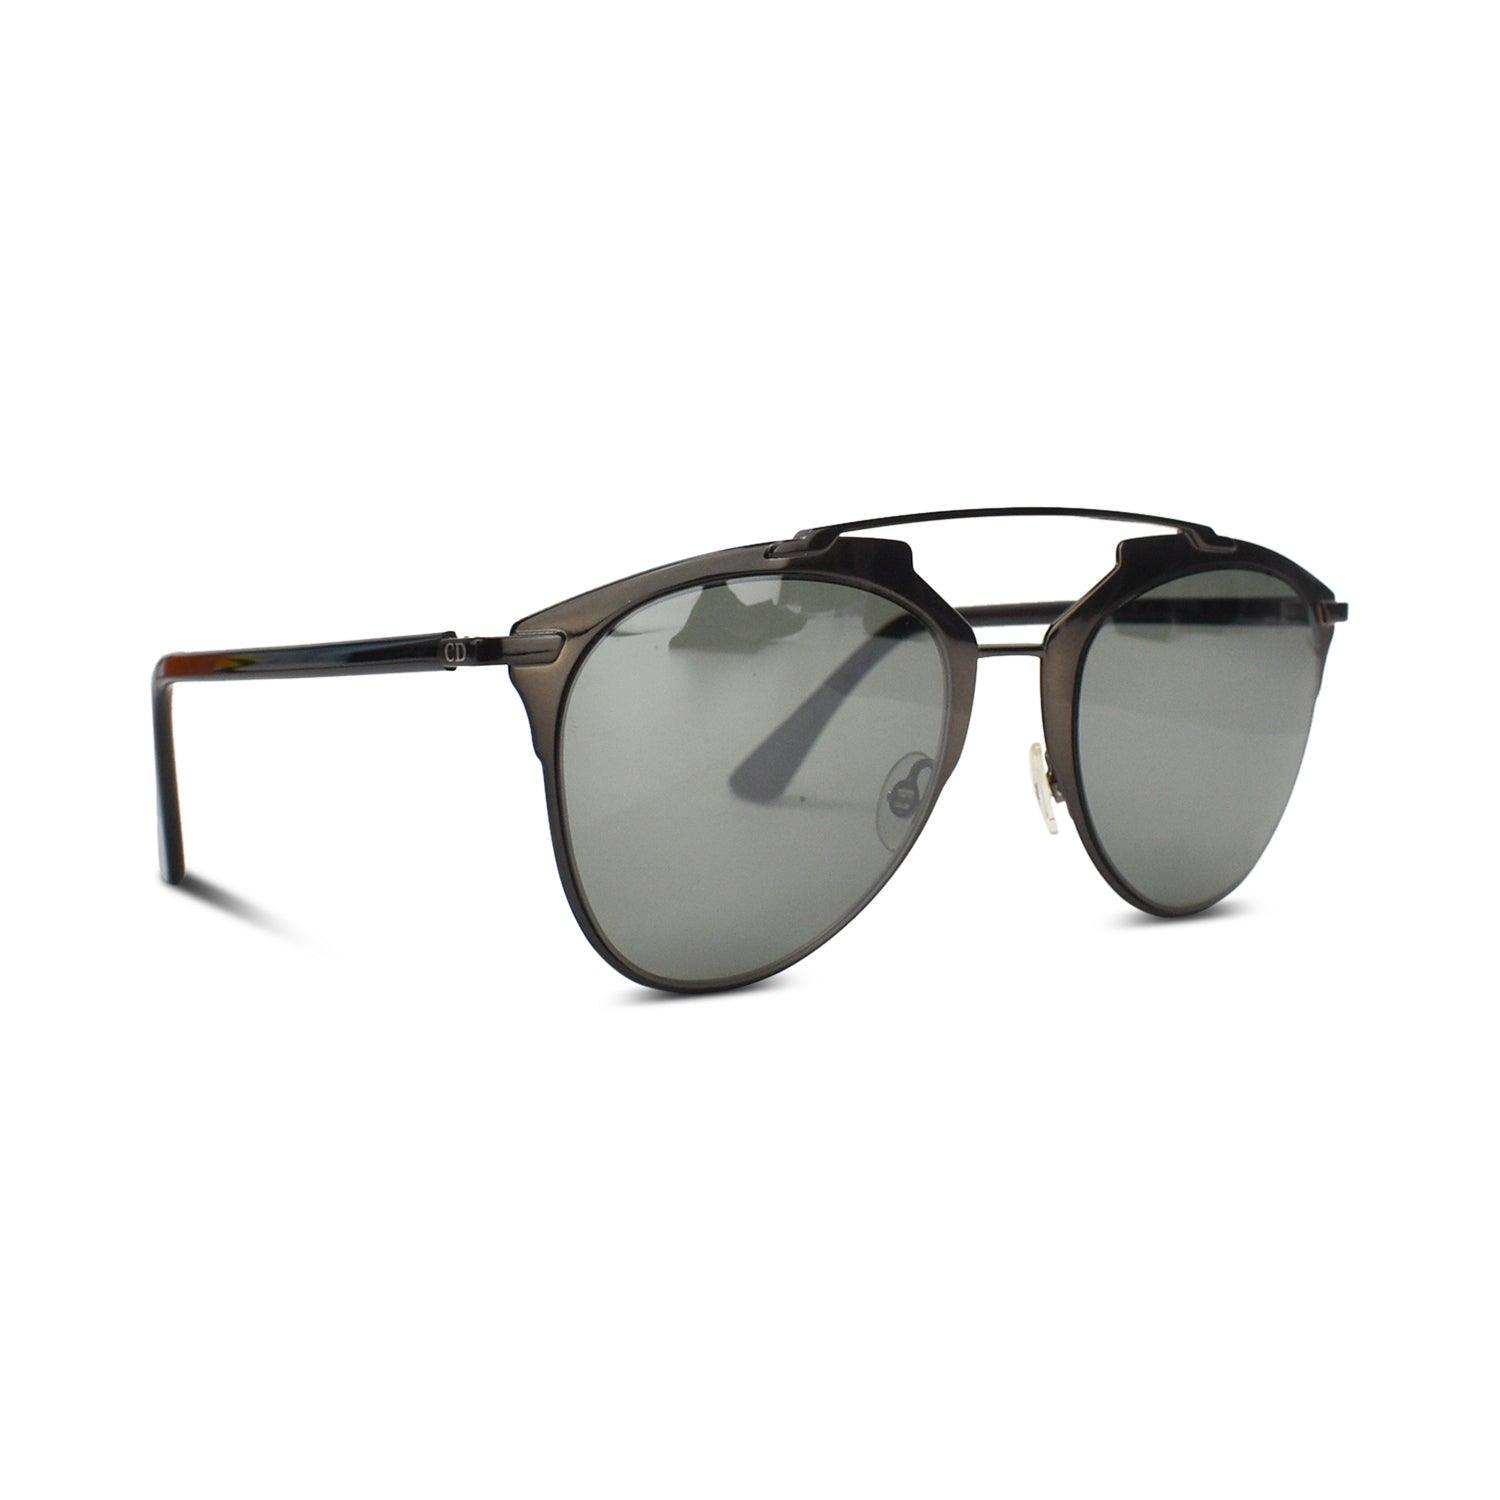 Christian Dior Aviator Sunglasses - Fashionably Yours